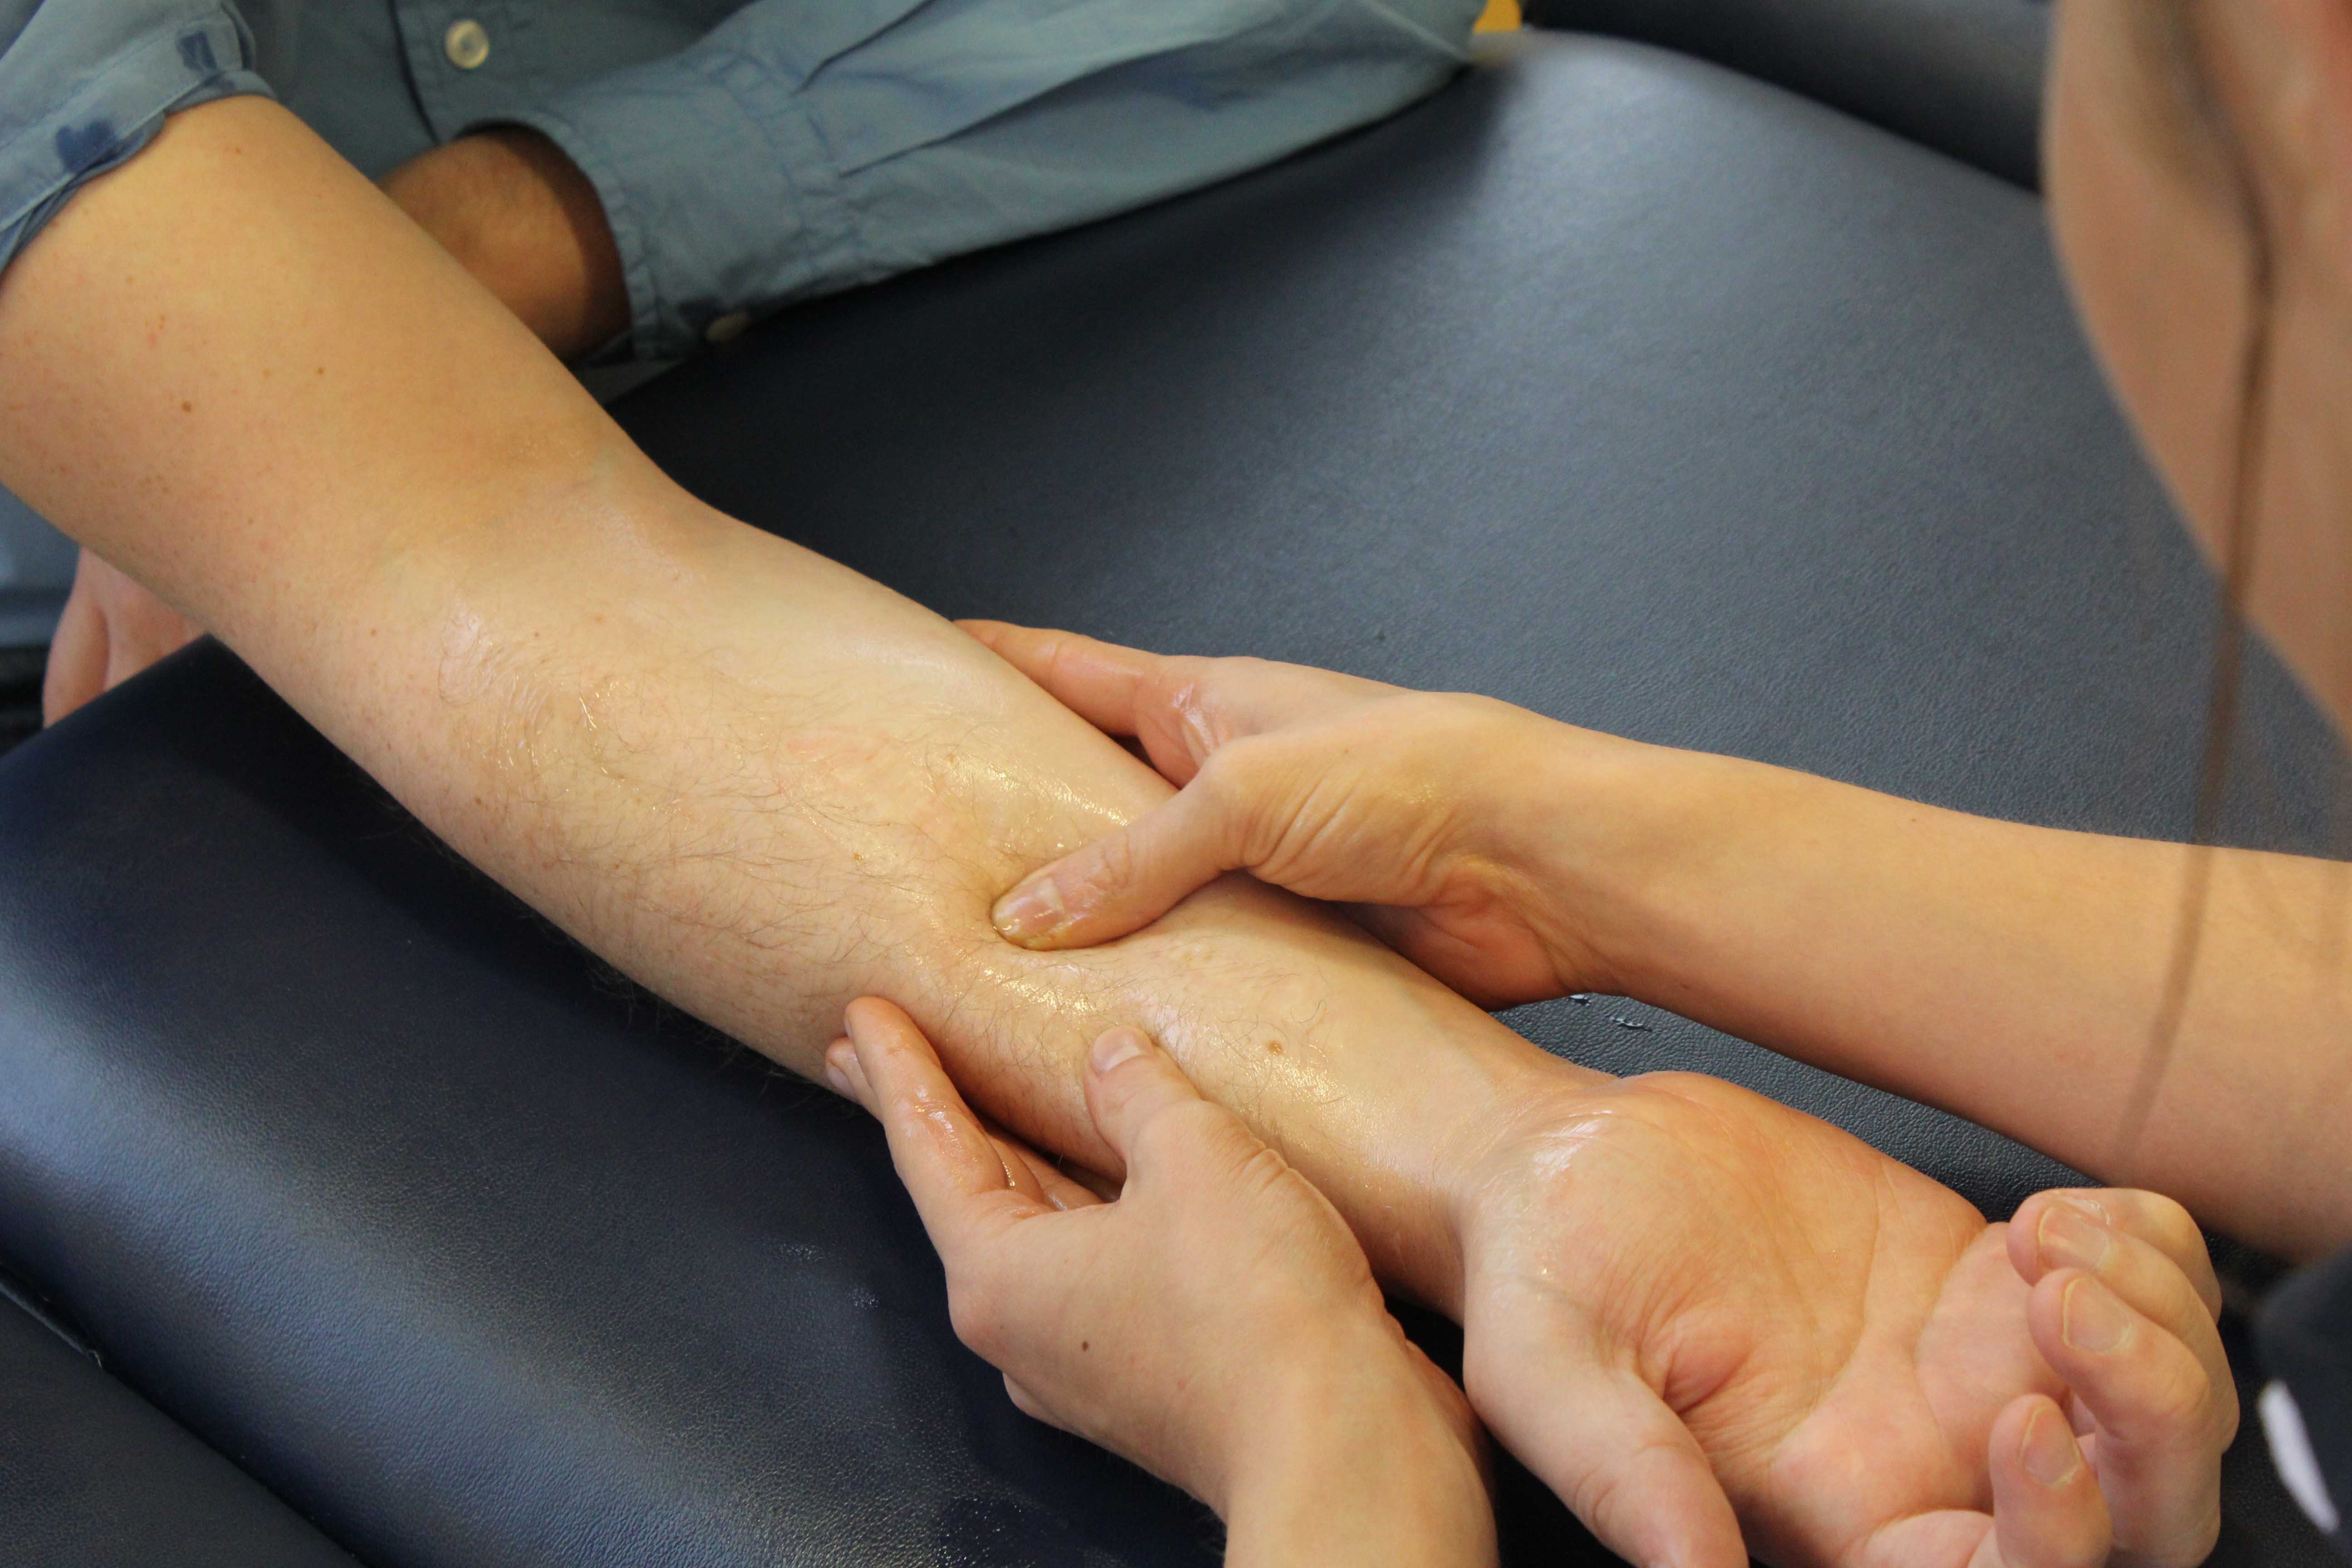 Soft tissue massage of the forearm focusing on flexor muscles